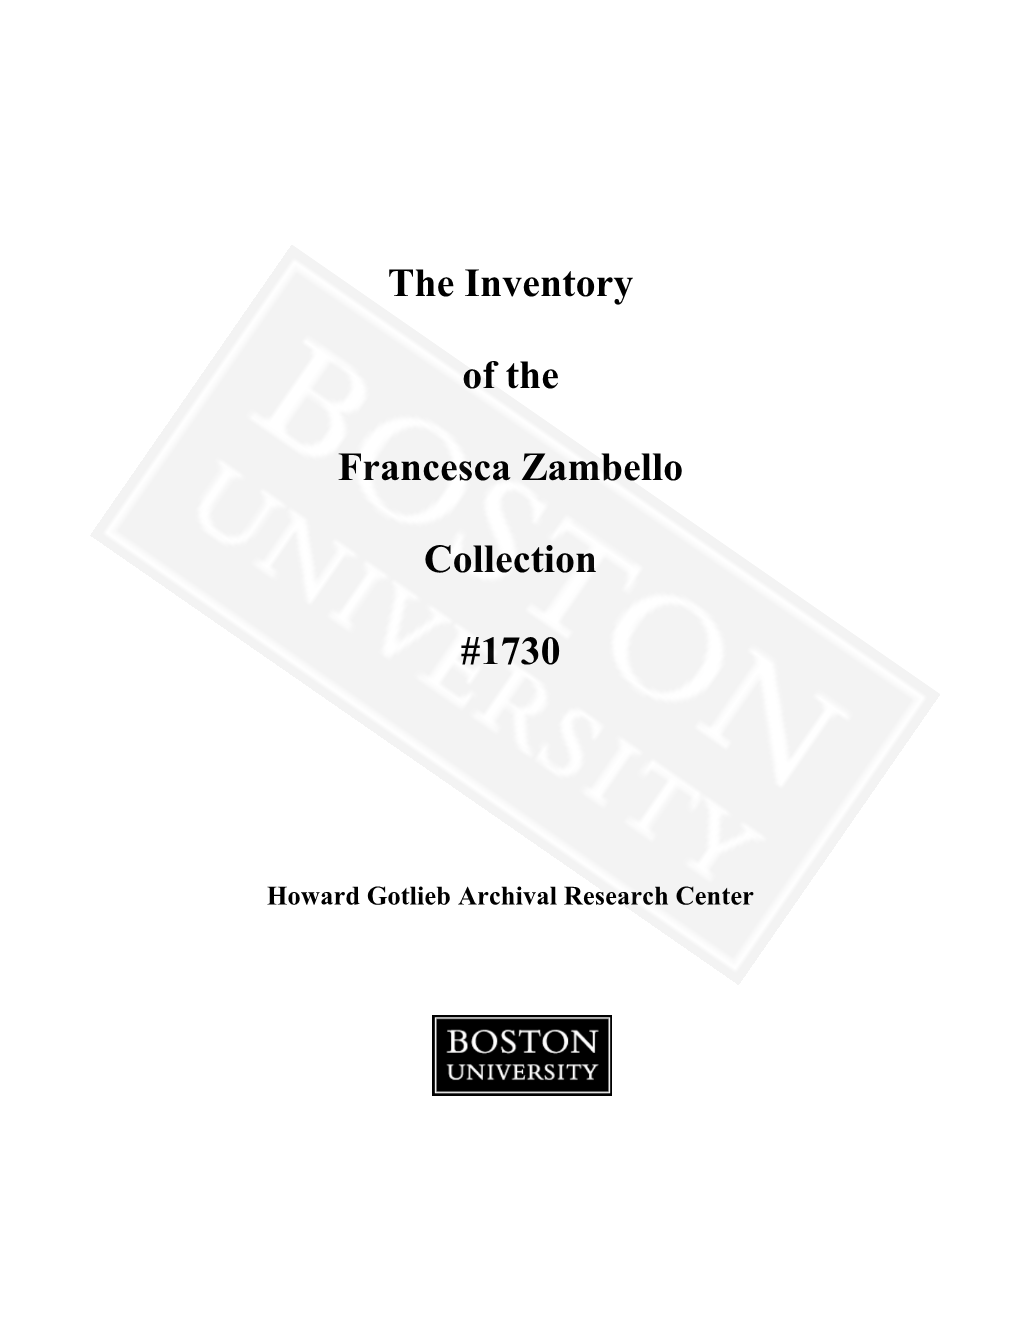 The Inventory of the Francesca Zambello Collection #1730